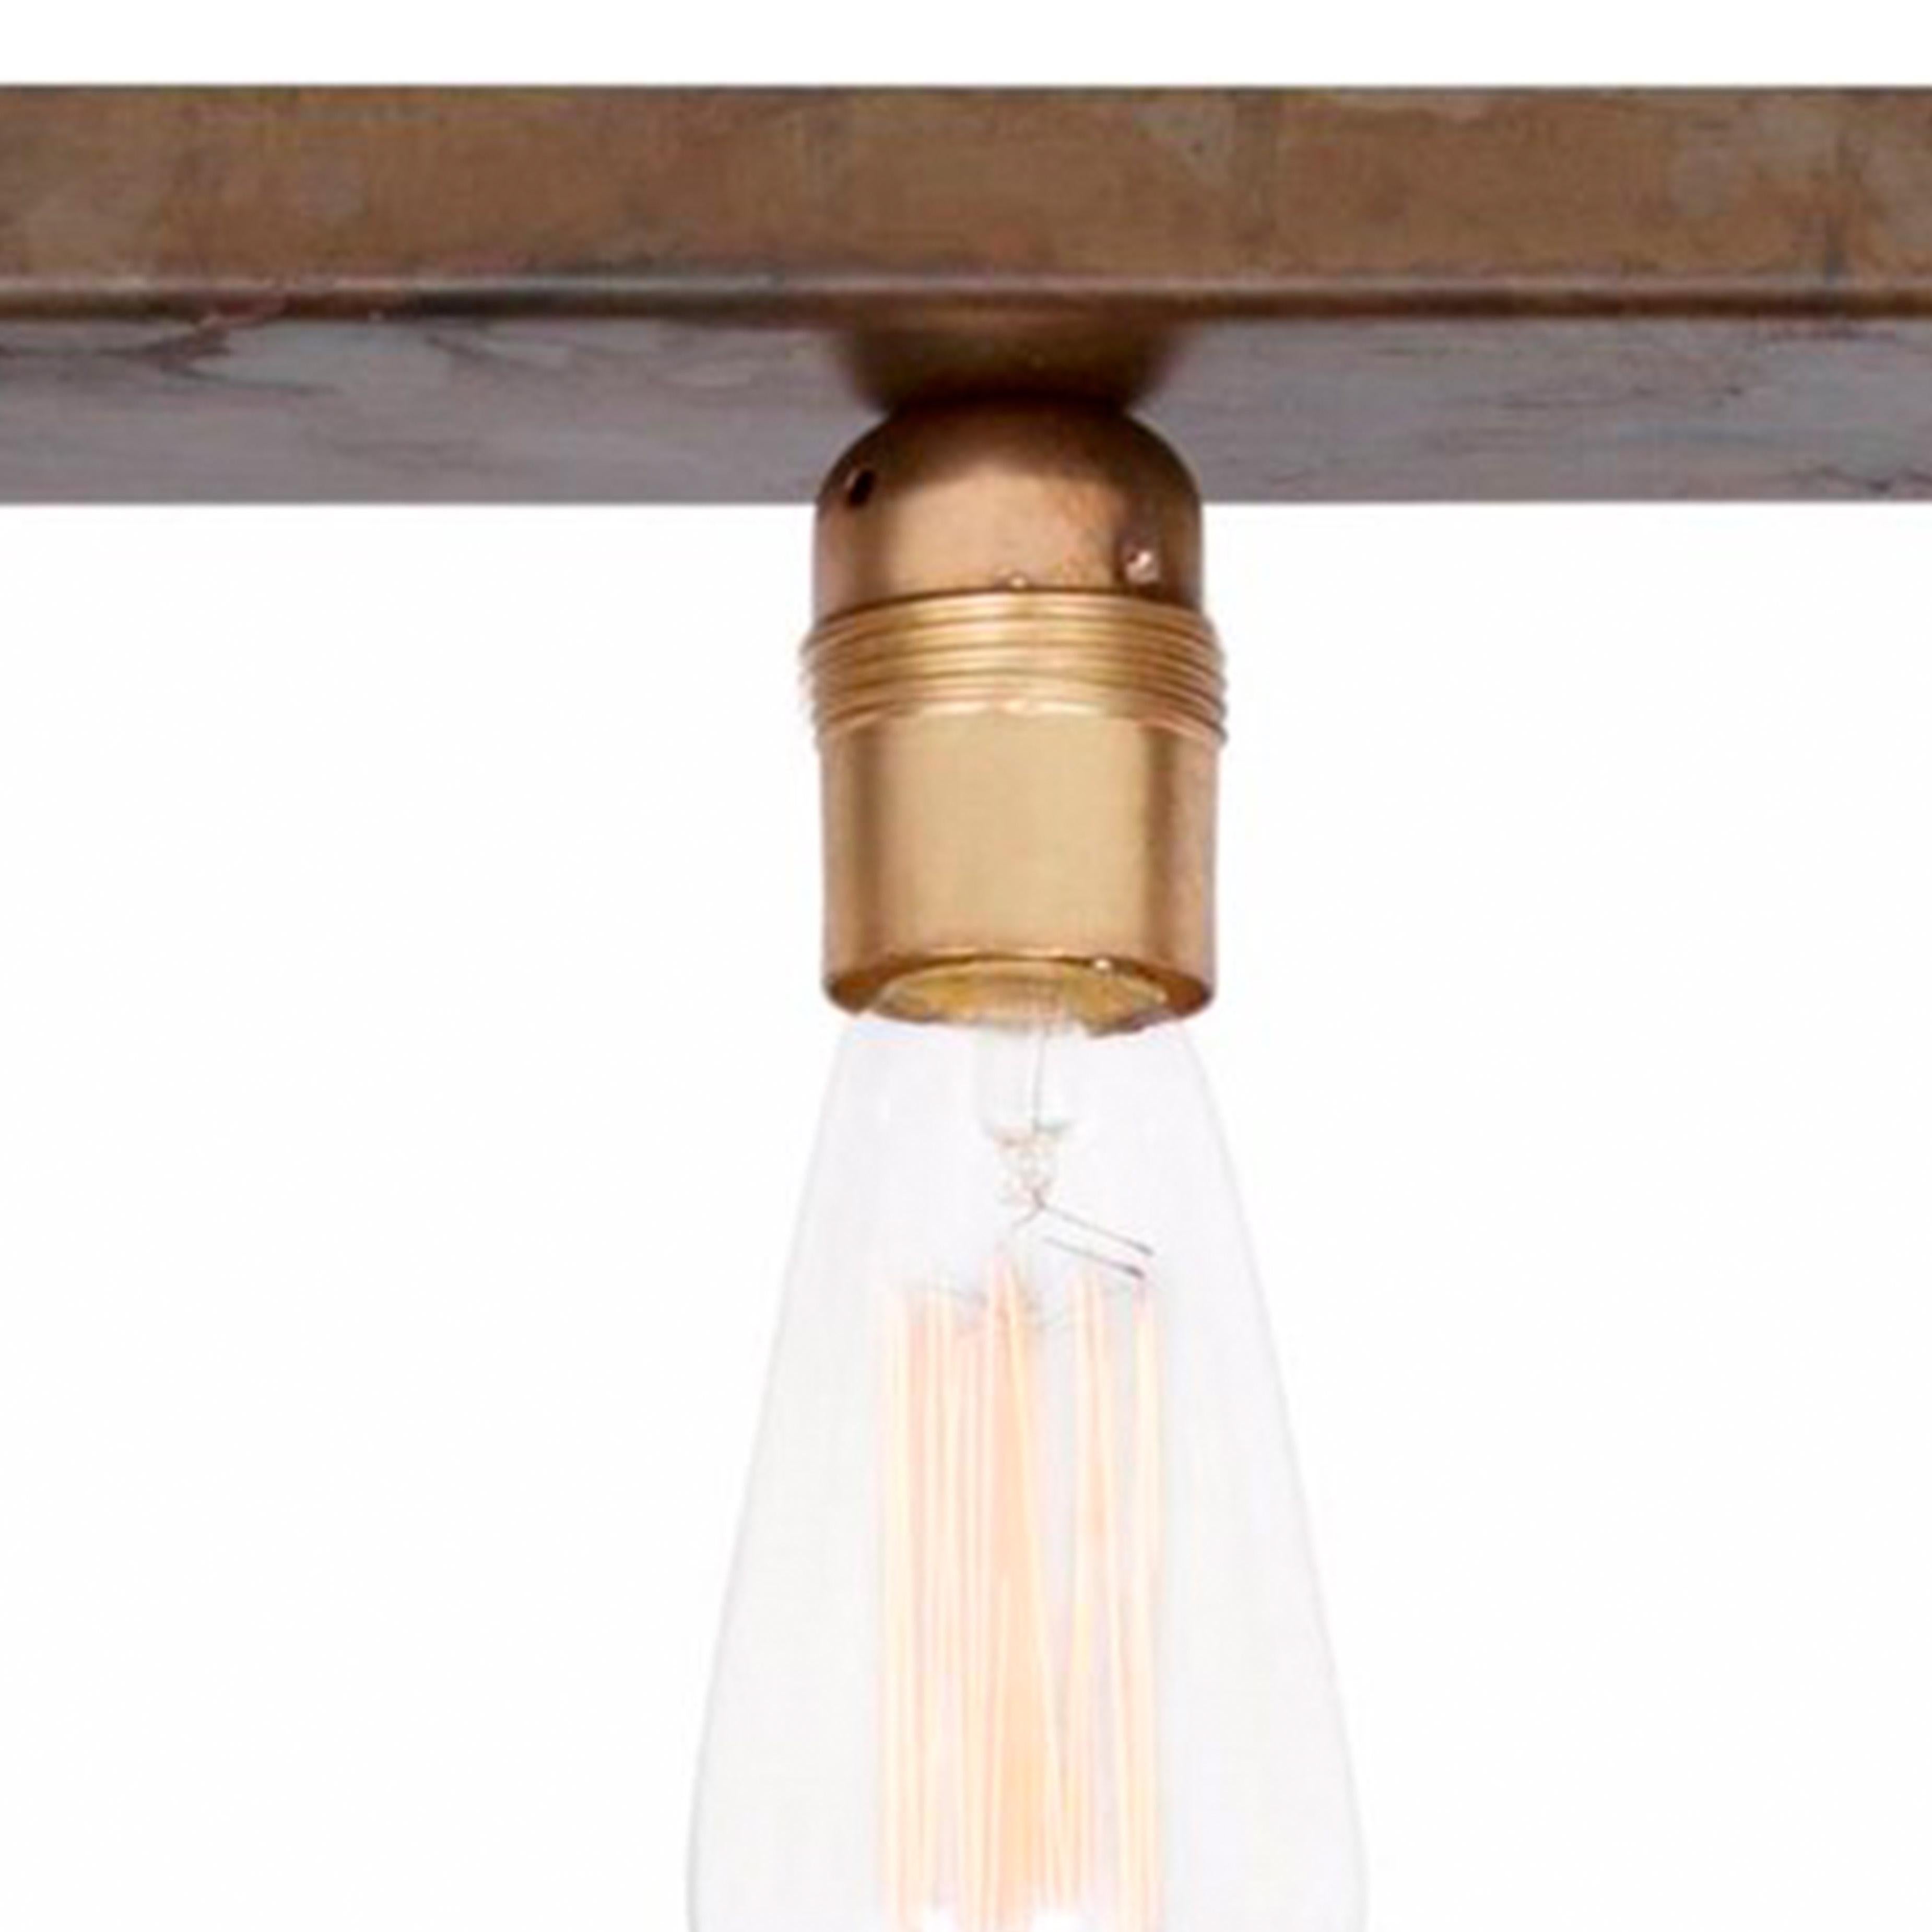 Swedish Konsthantverk 3406-6 Raad Raw Brass and Oxidized Iron Ceiling Lamp For Sale